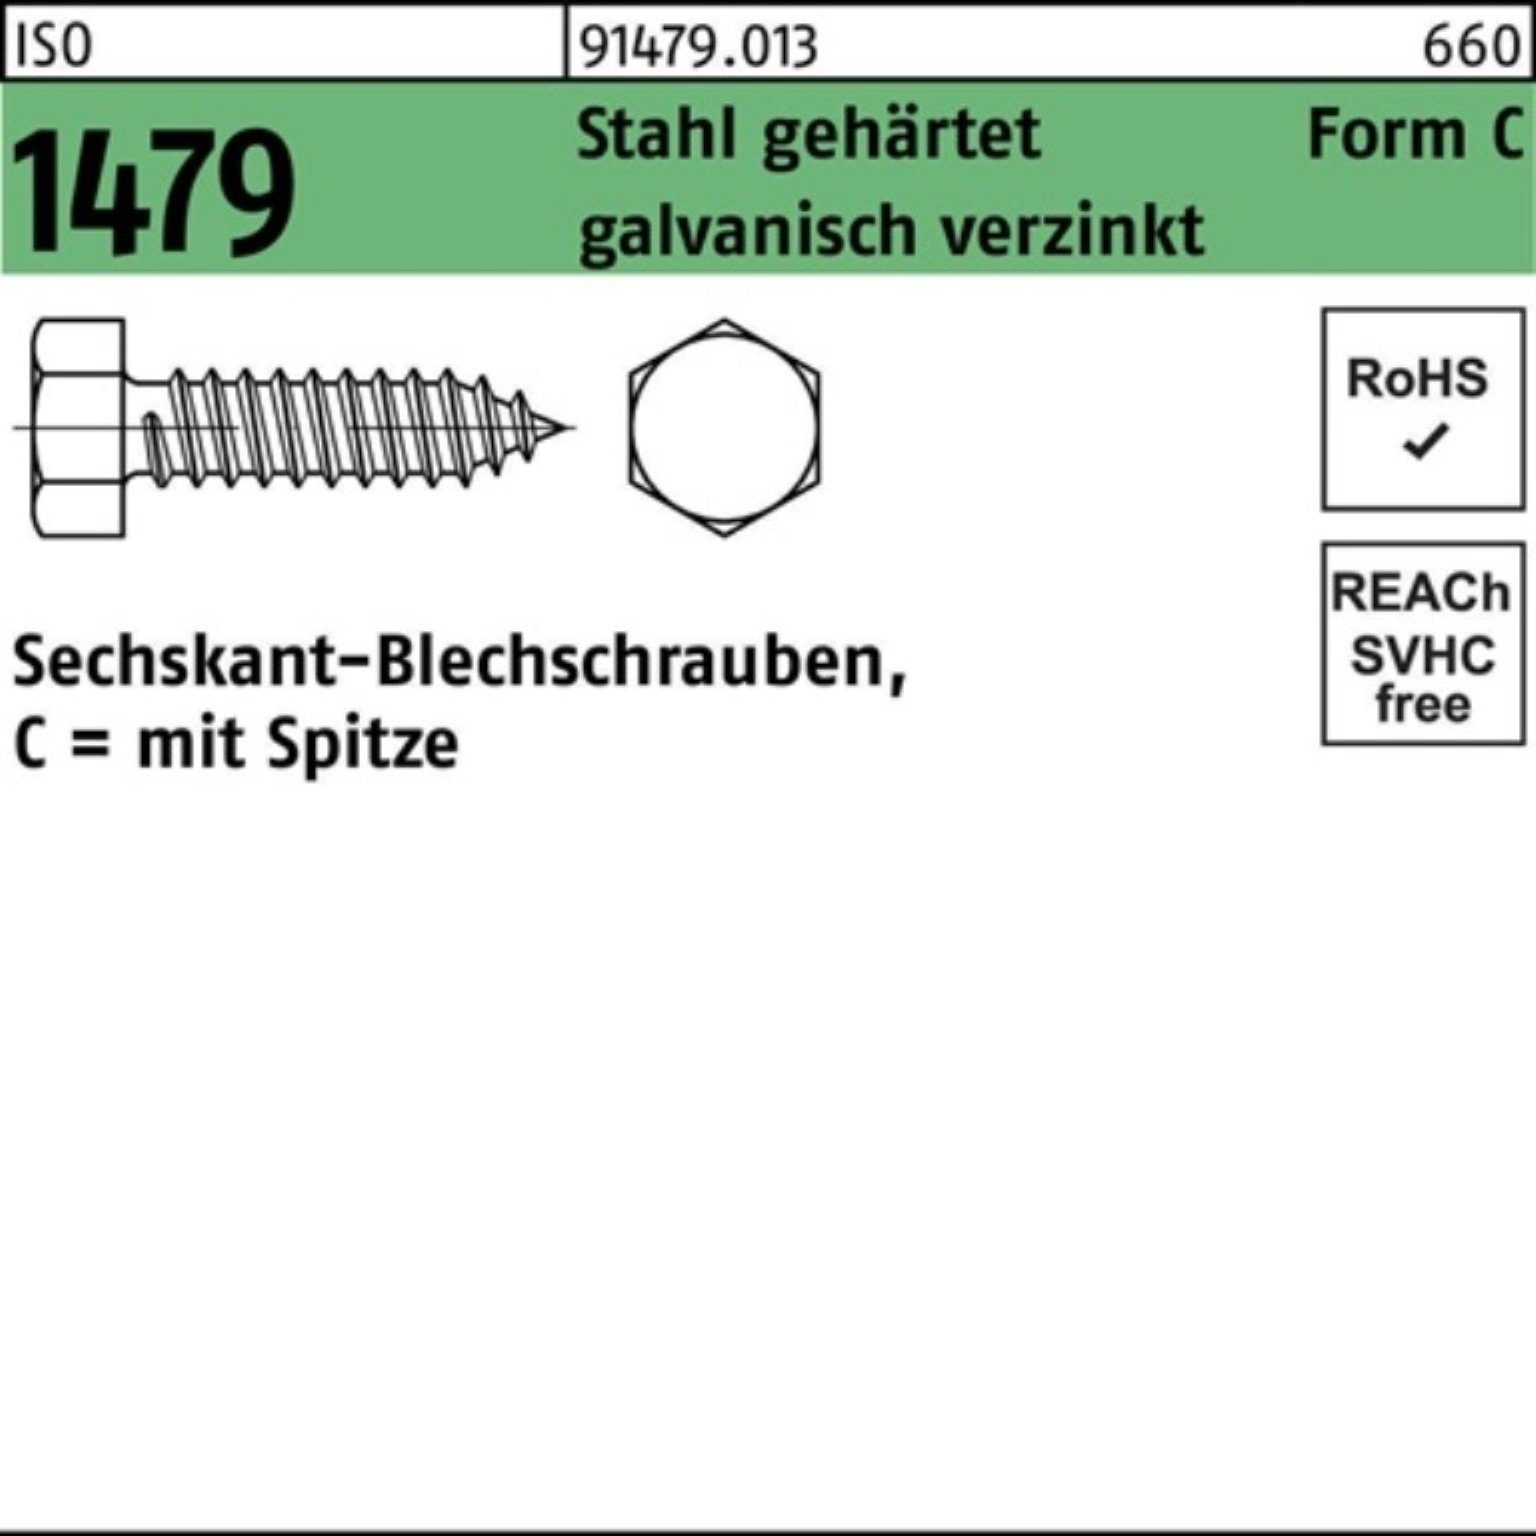 Pack 1479 Spitze/6-kt ISO Blechschraube Blechschraube Reyher 1000er Stahl gehärte C 3,5x25